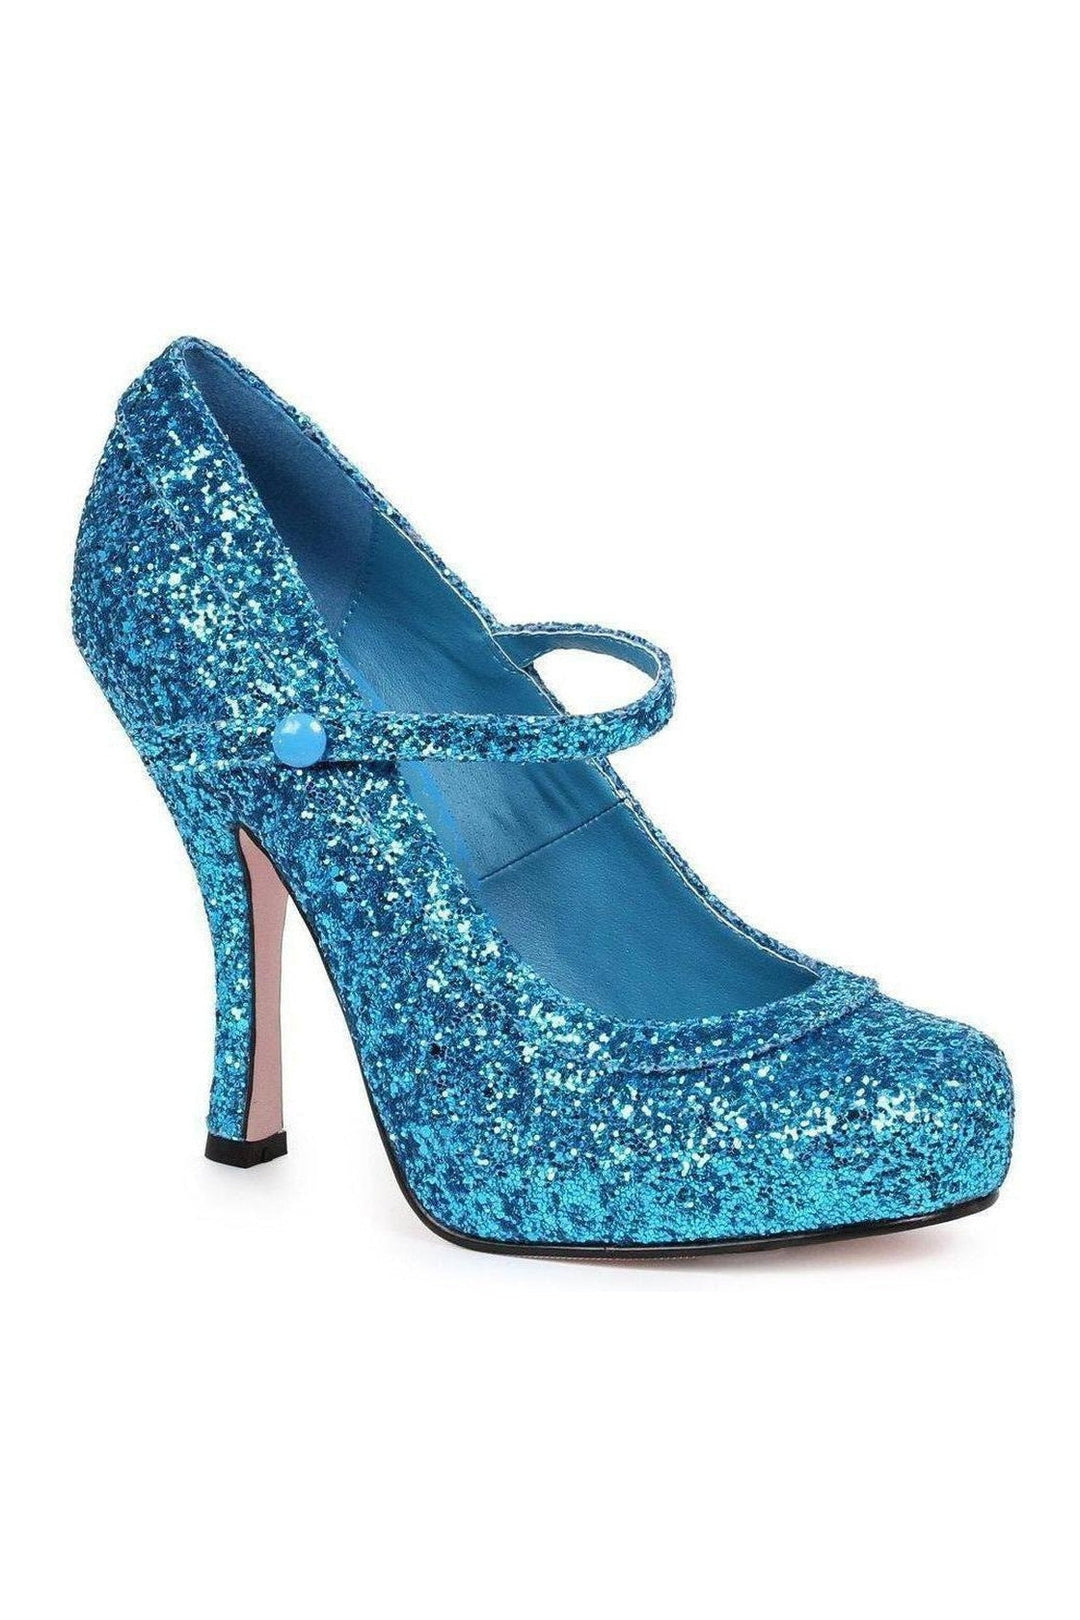 423-CANDY Costume Pump | Blue Glitter-Ellie Shoes-SEXYSHOES.COM